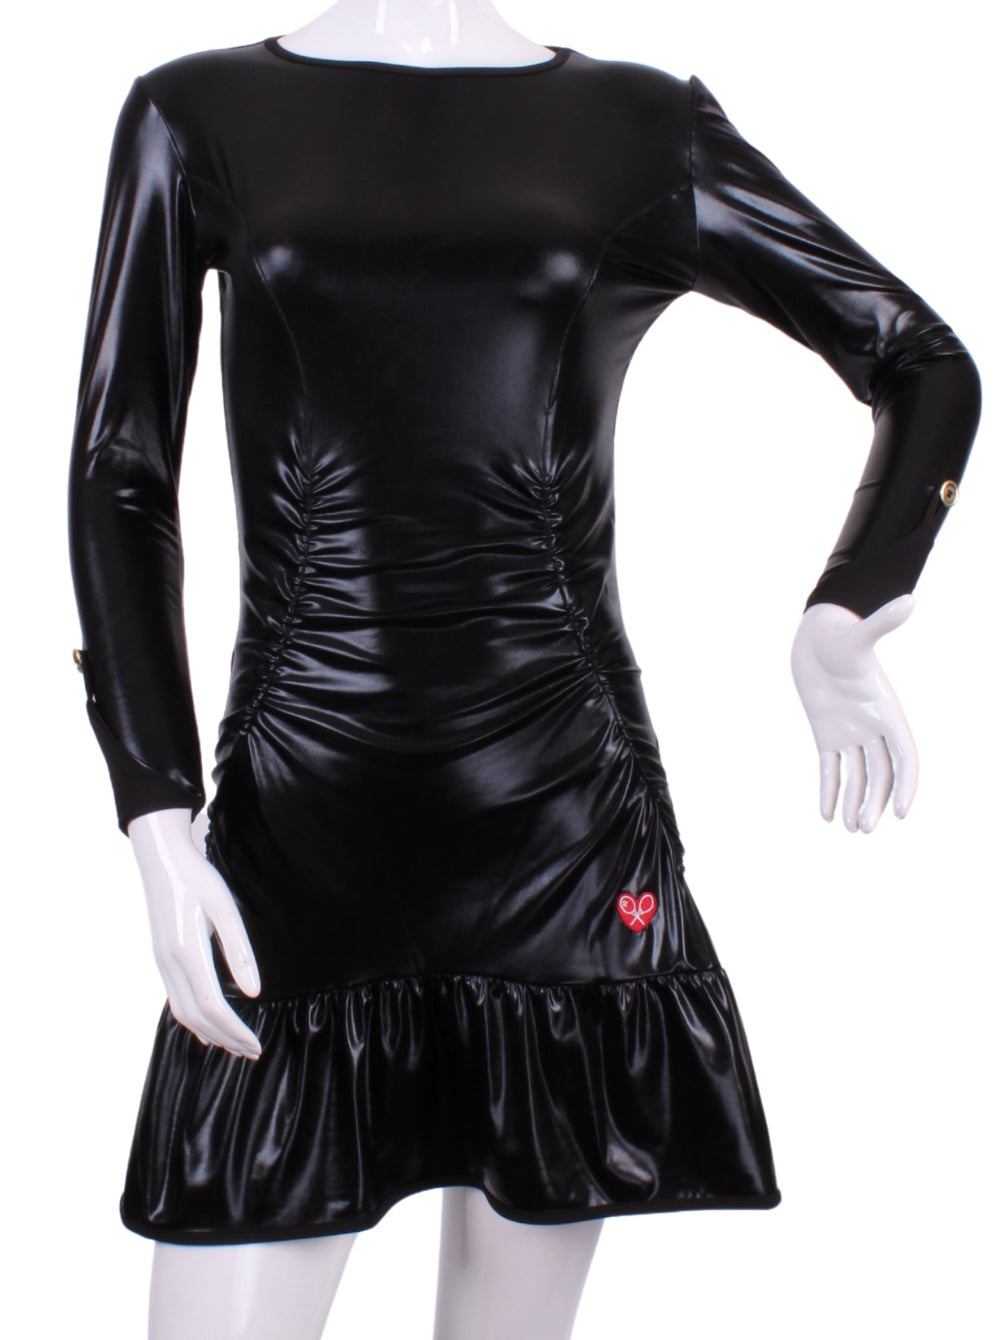 Shiny Black Long Sleeve Monroe Solid Tennis Dress - I LOVE MY DOUBLES PARTNER!!!